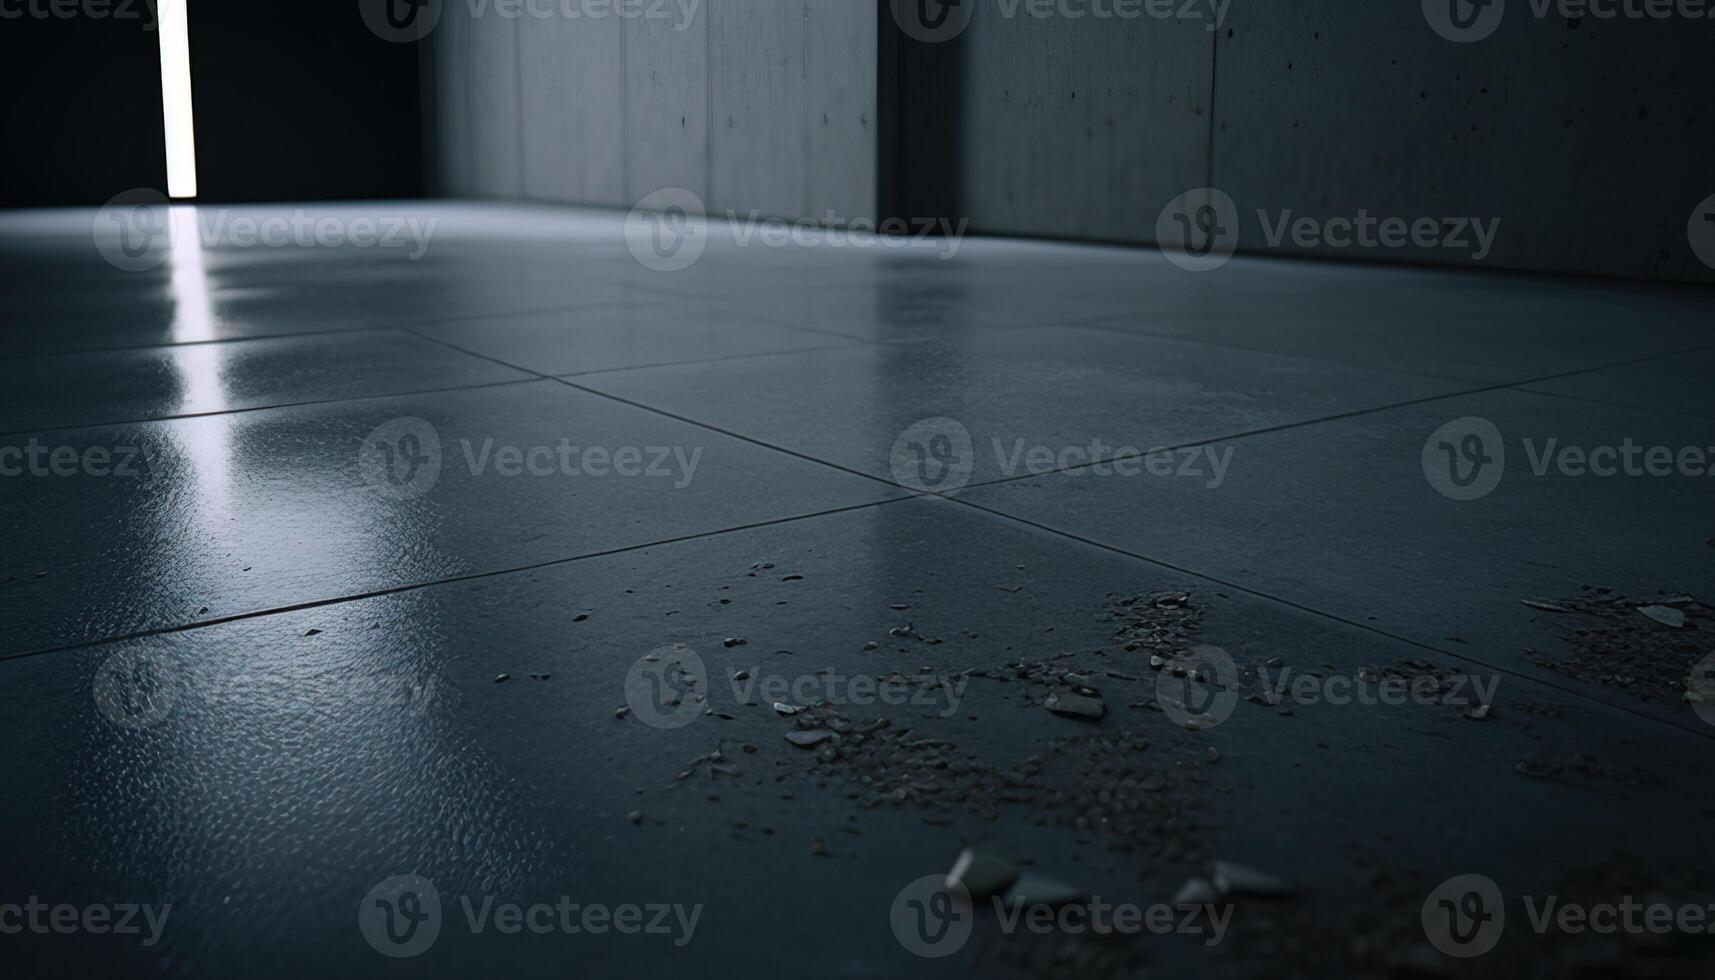 texture dark concrete floor, digital art illustration, photo